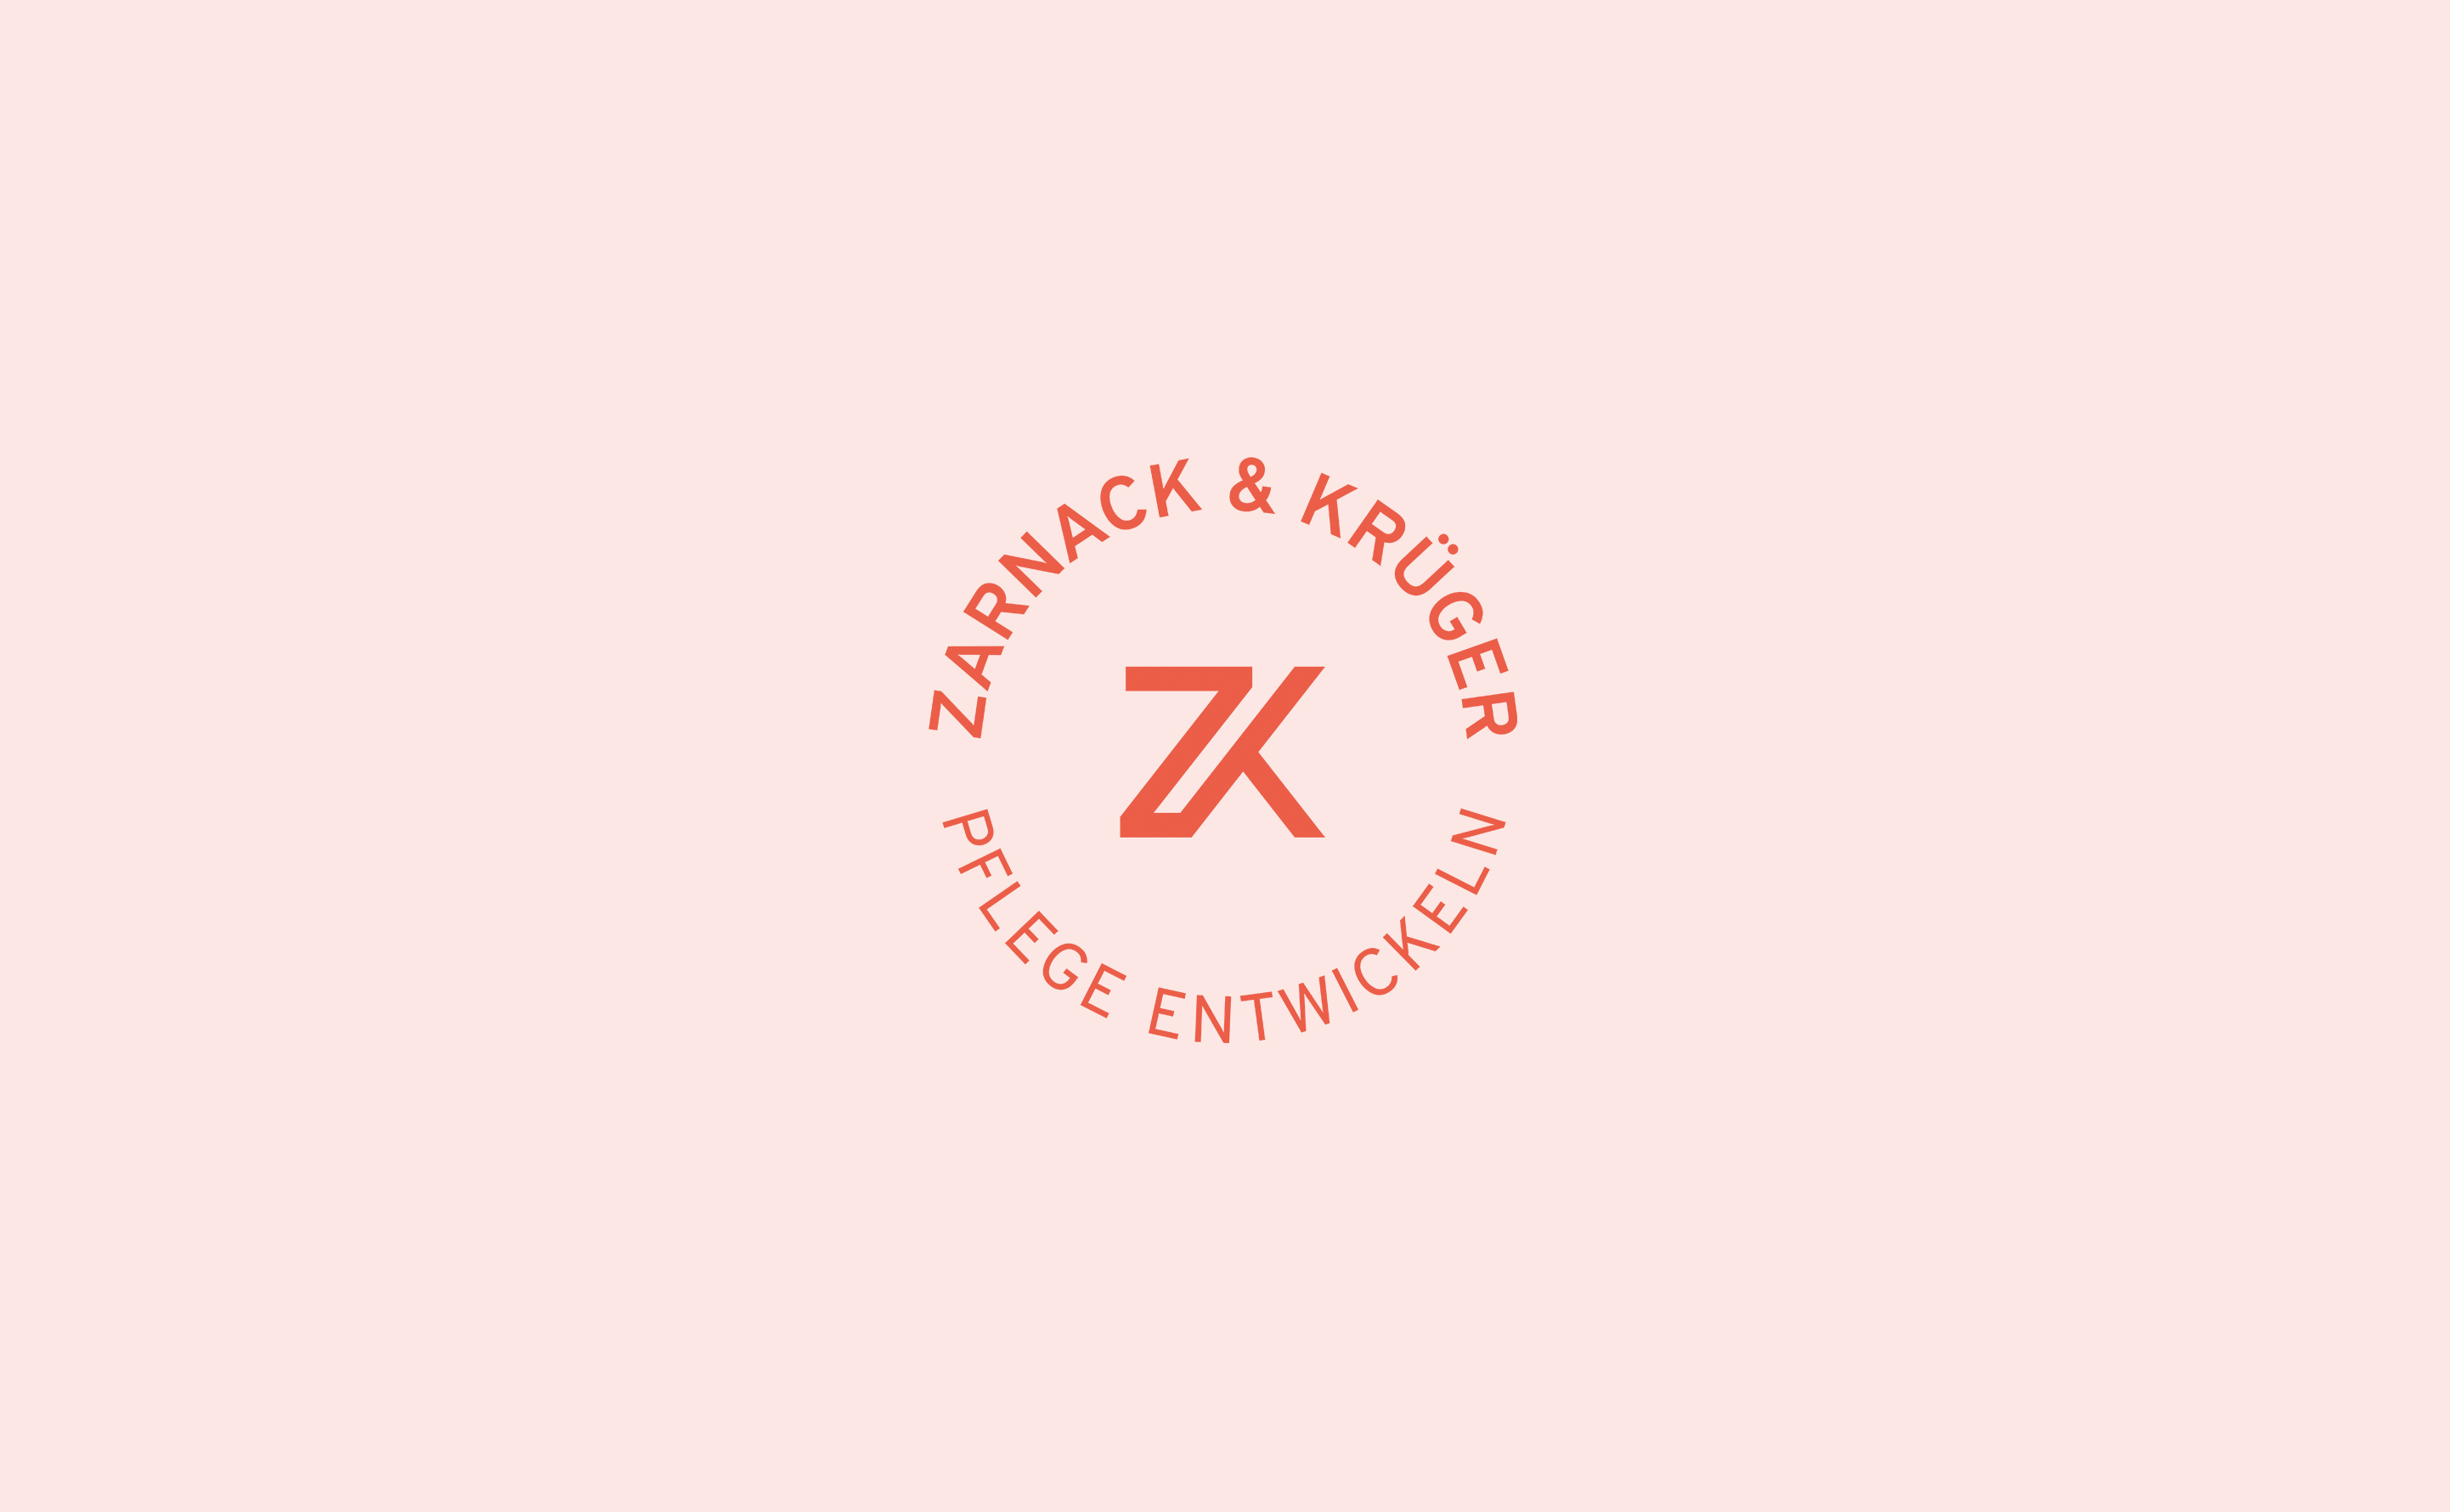 zarnack-krueger-logo-referenz-intro.jpg